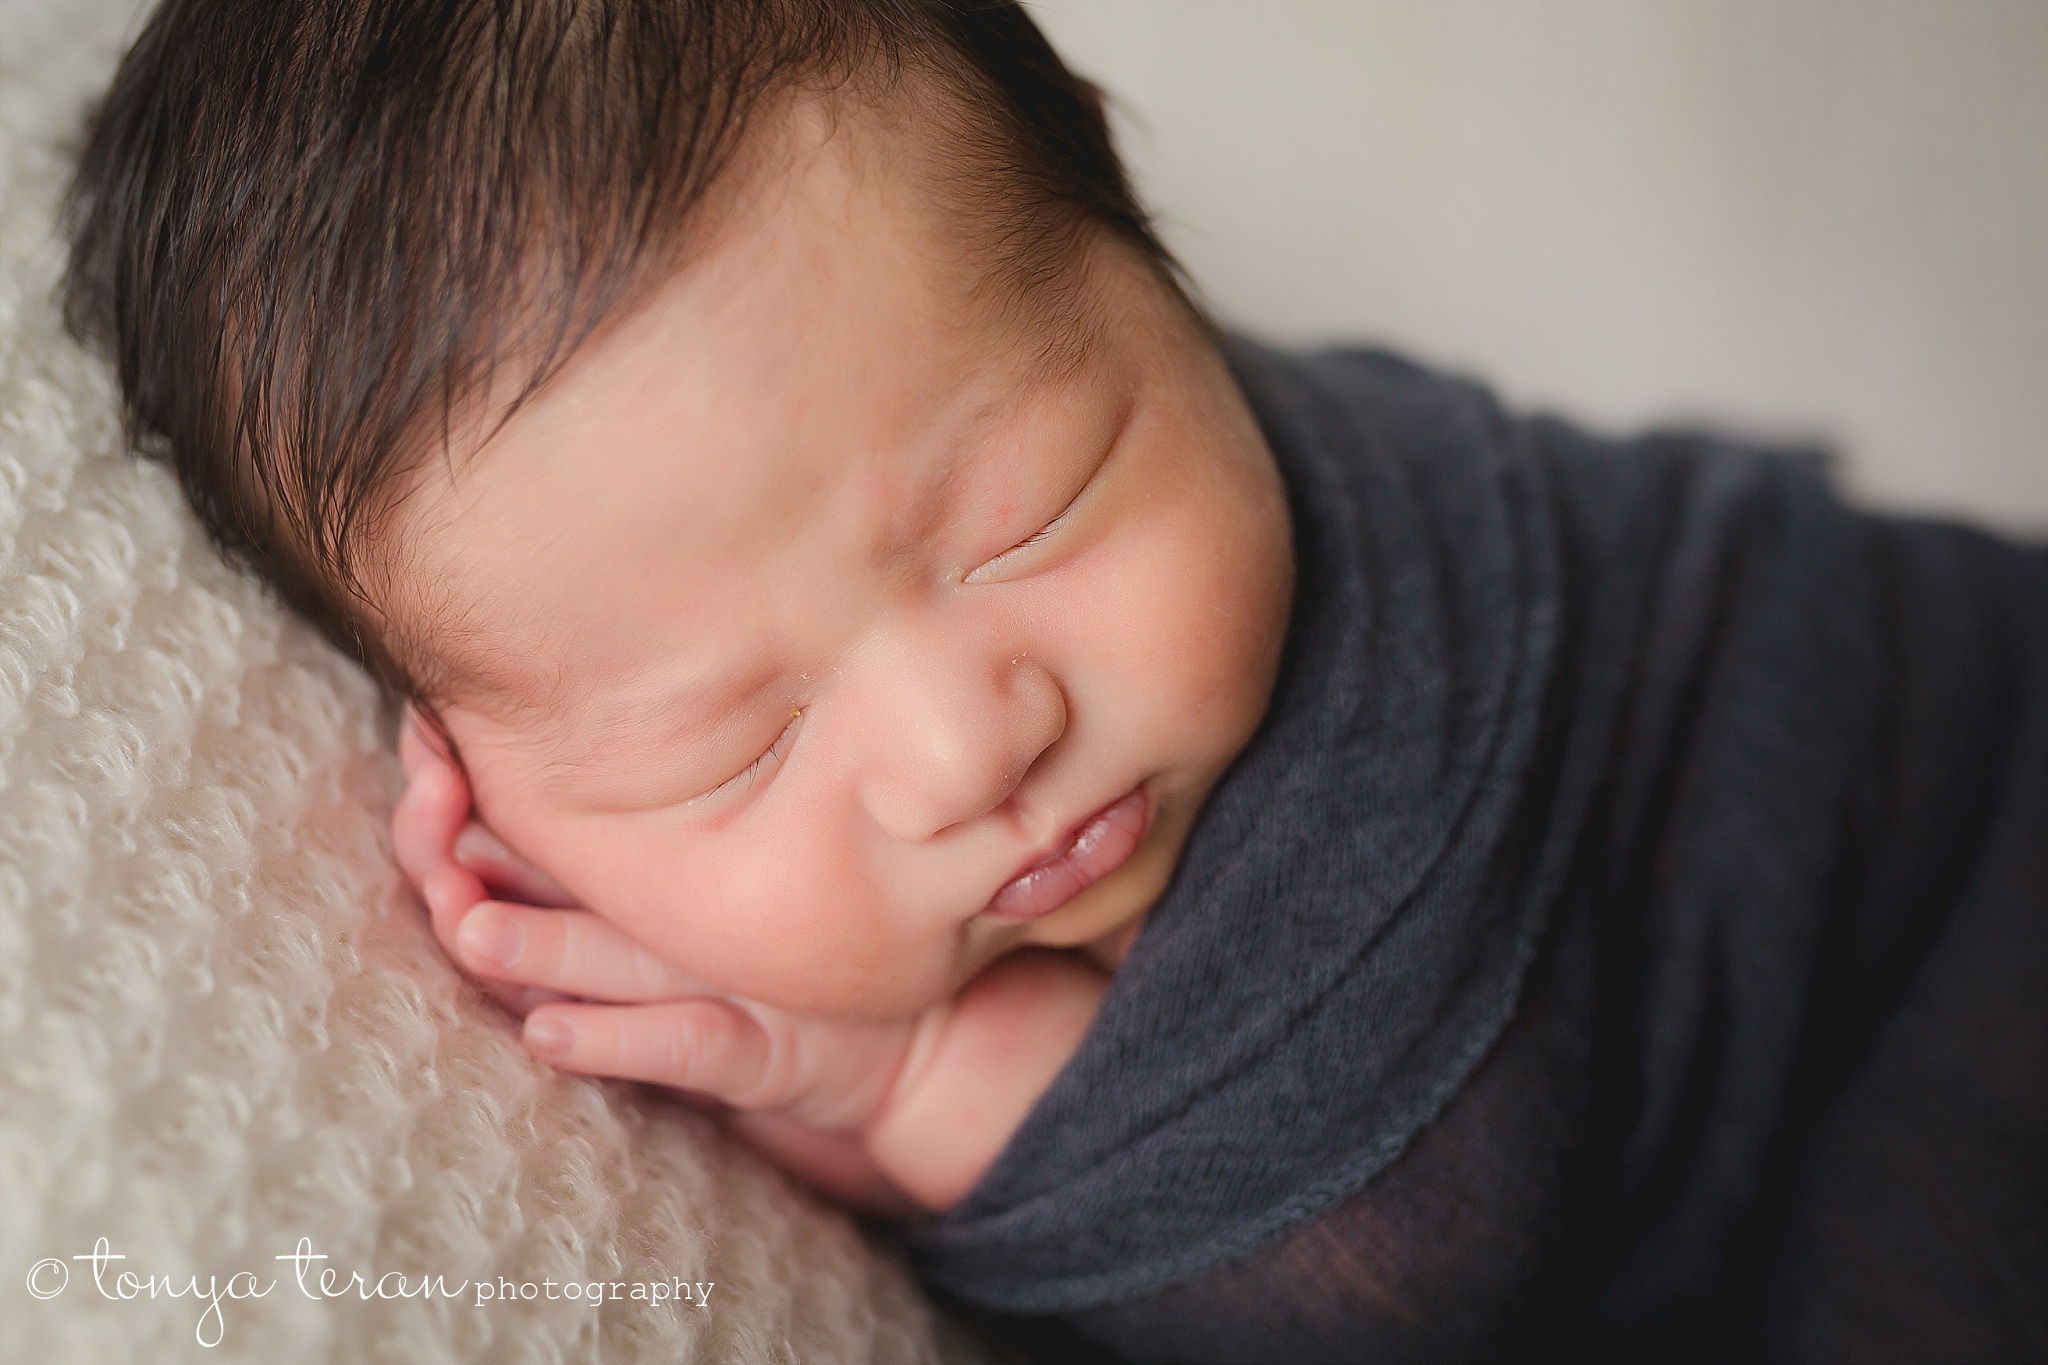 Newborn Photo Session | Tonya Teran Photography, Washington, DC Newborn, Baby, and Family Photographer